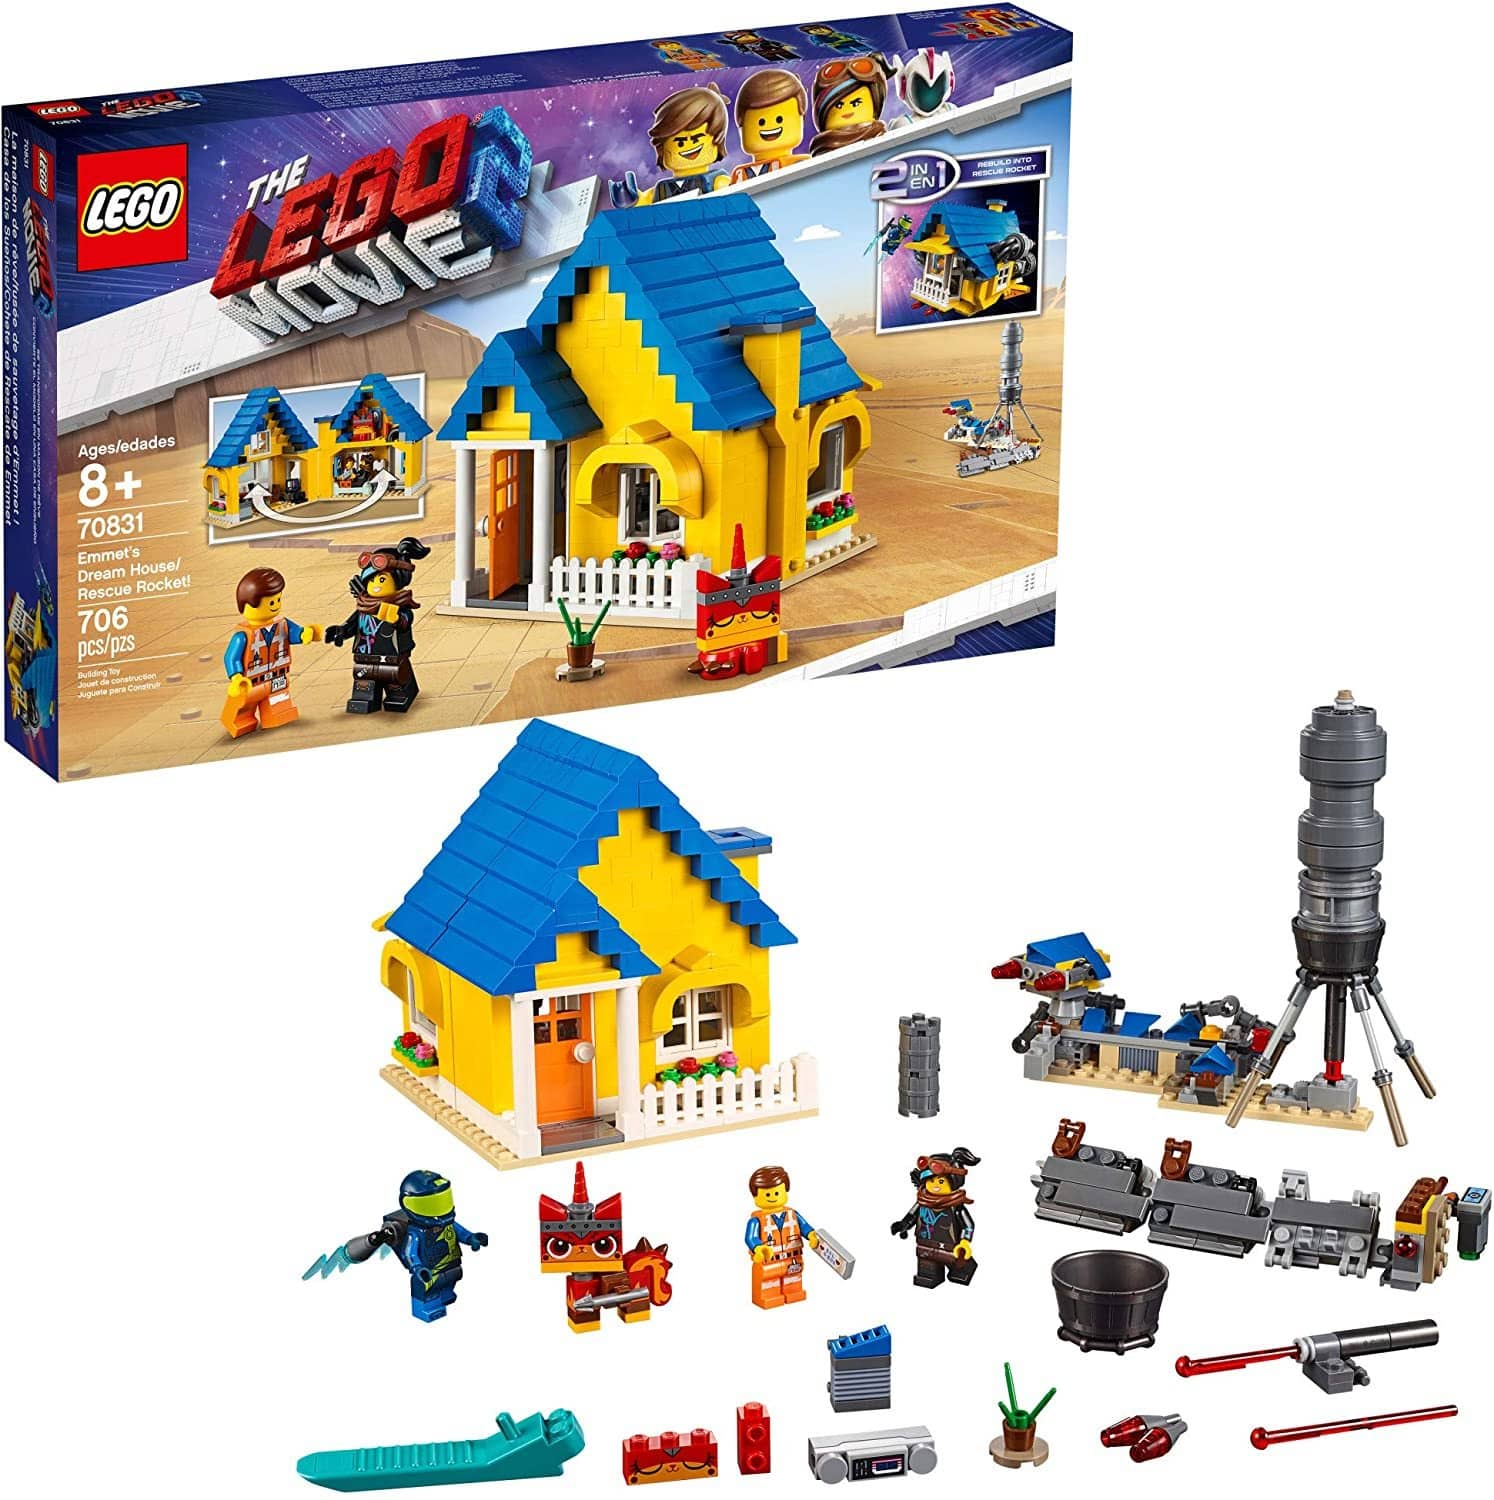 LEGO 70831: LEGO Movie 2: Emmets Dream House/Rescue Rocket! (706 Pieces)-Kidding Around NYC